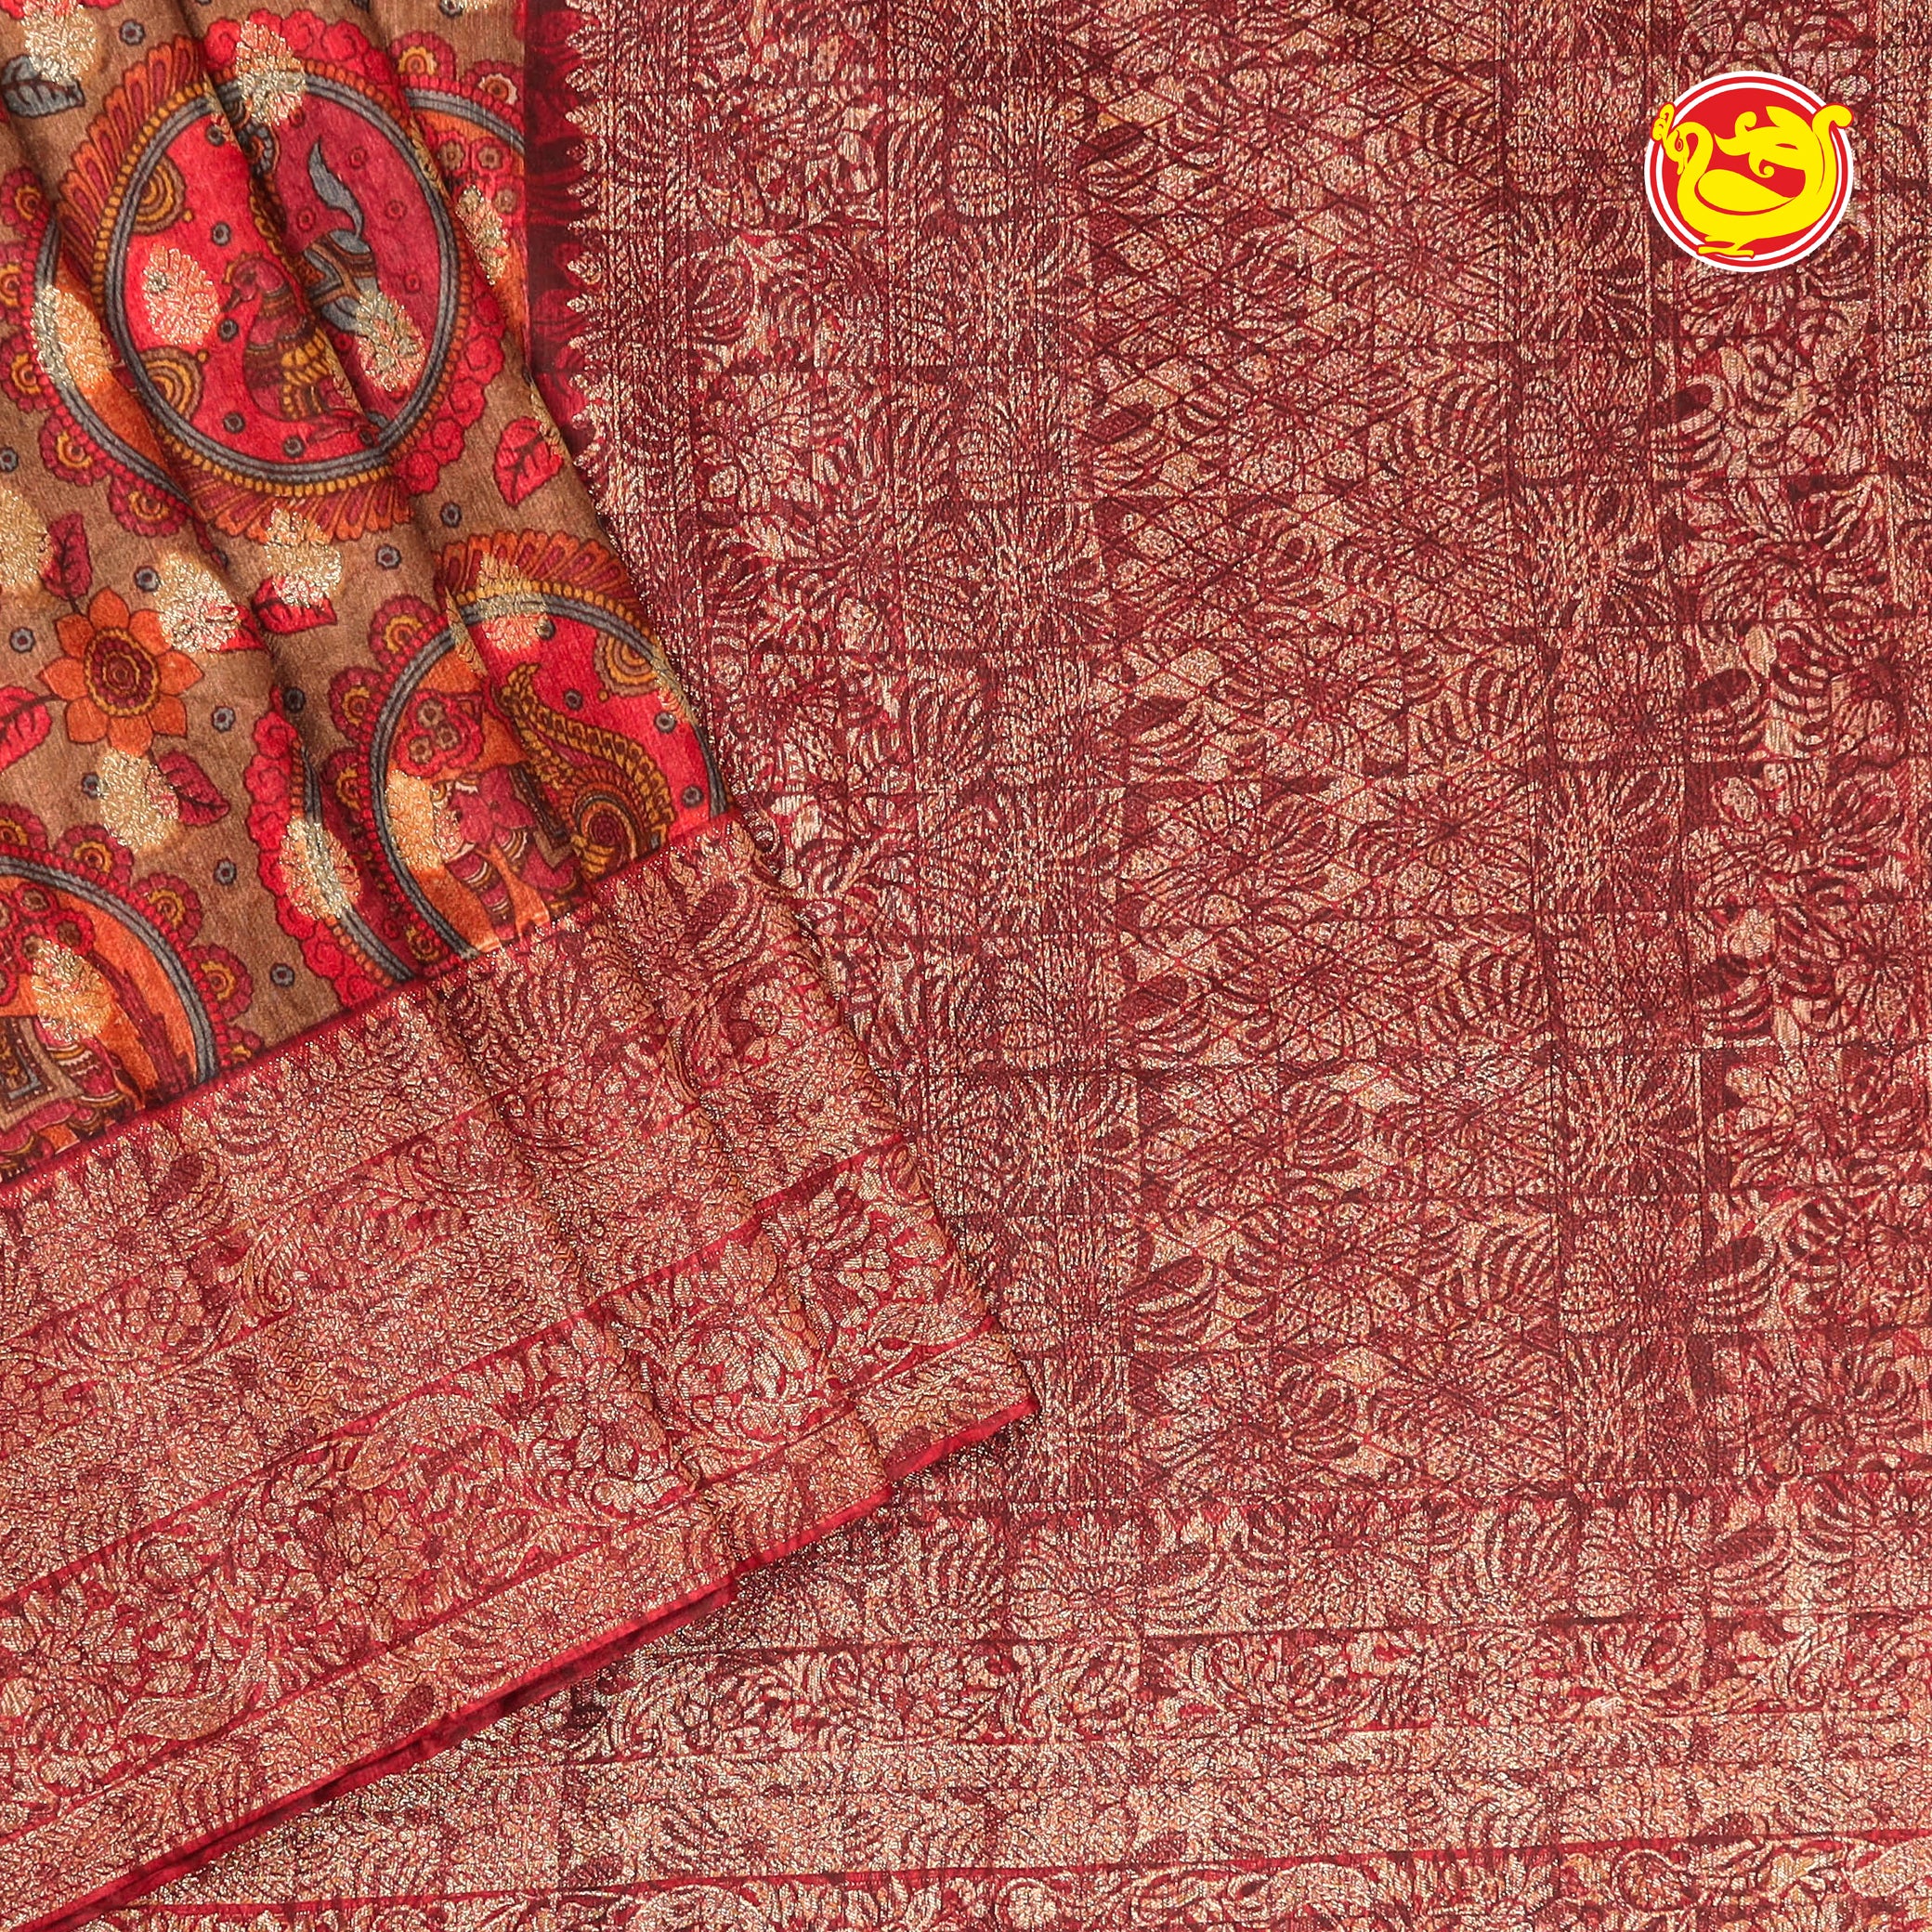 Red art dola silk saree